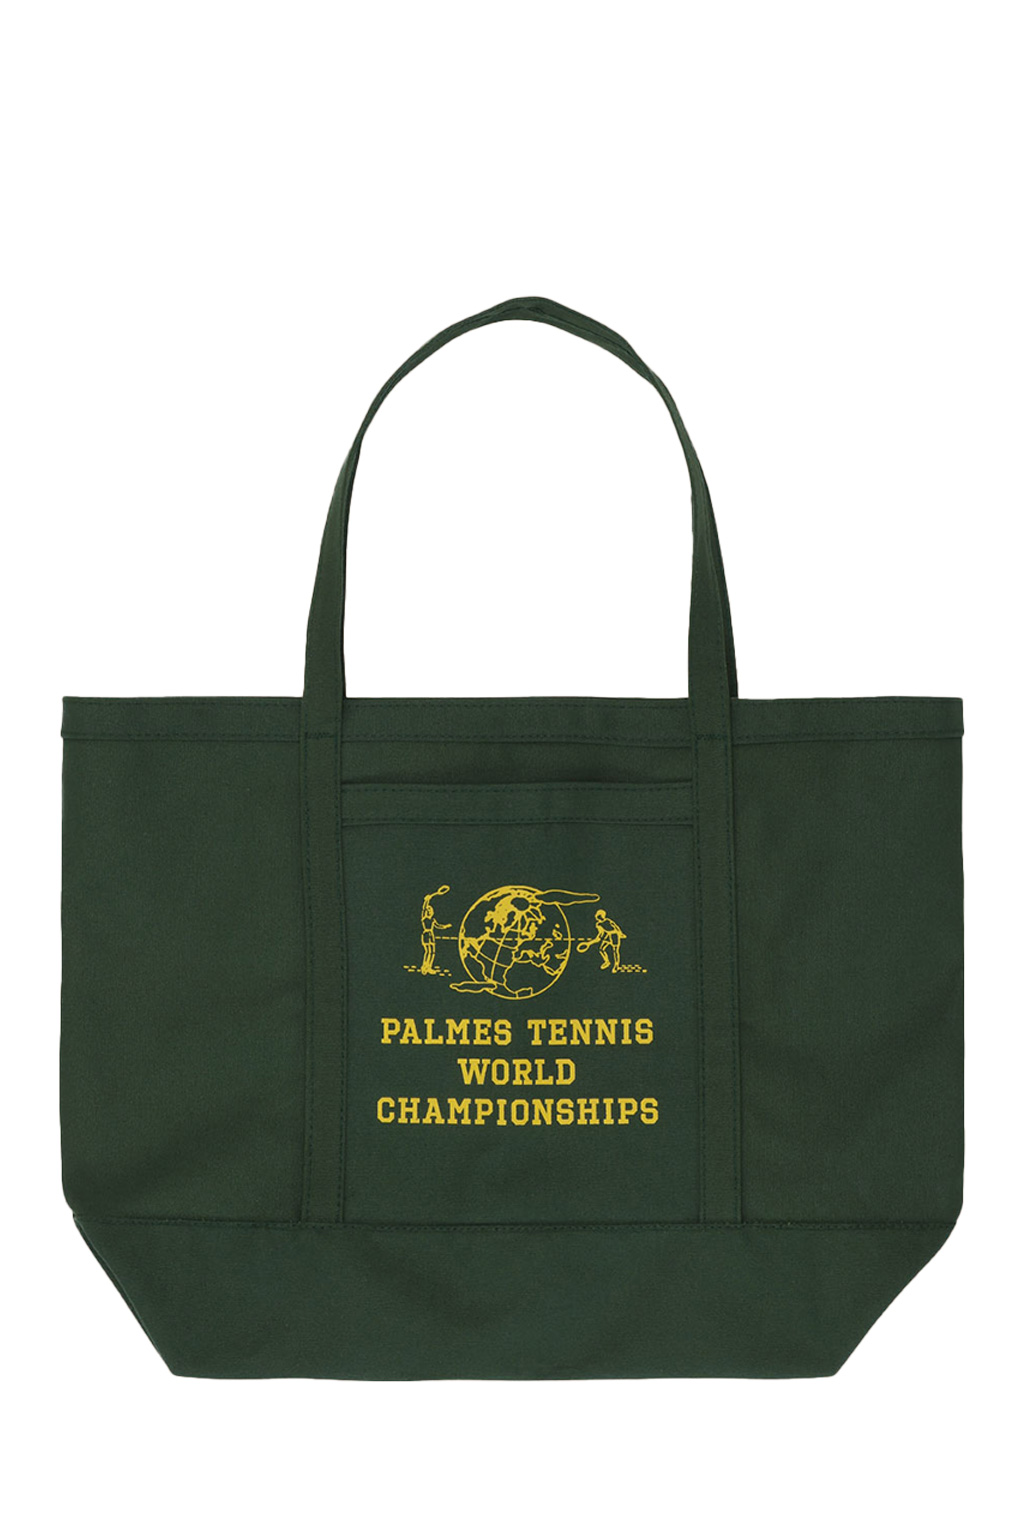 Palmes Championship Tote Bag - 2 Colors